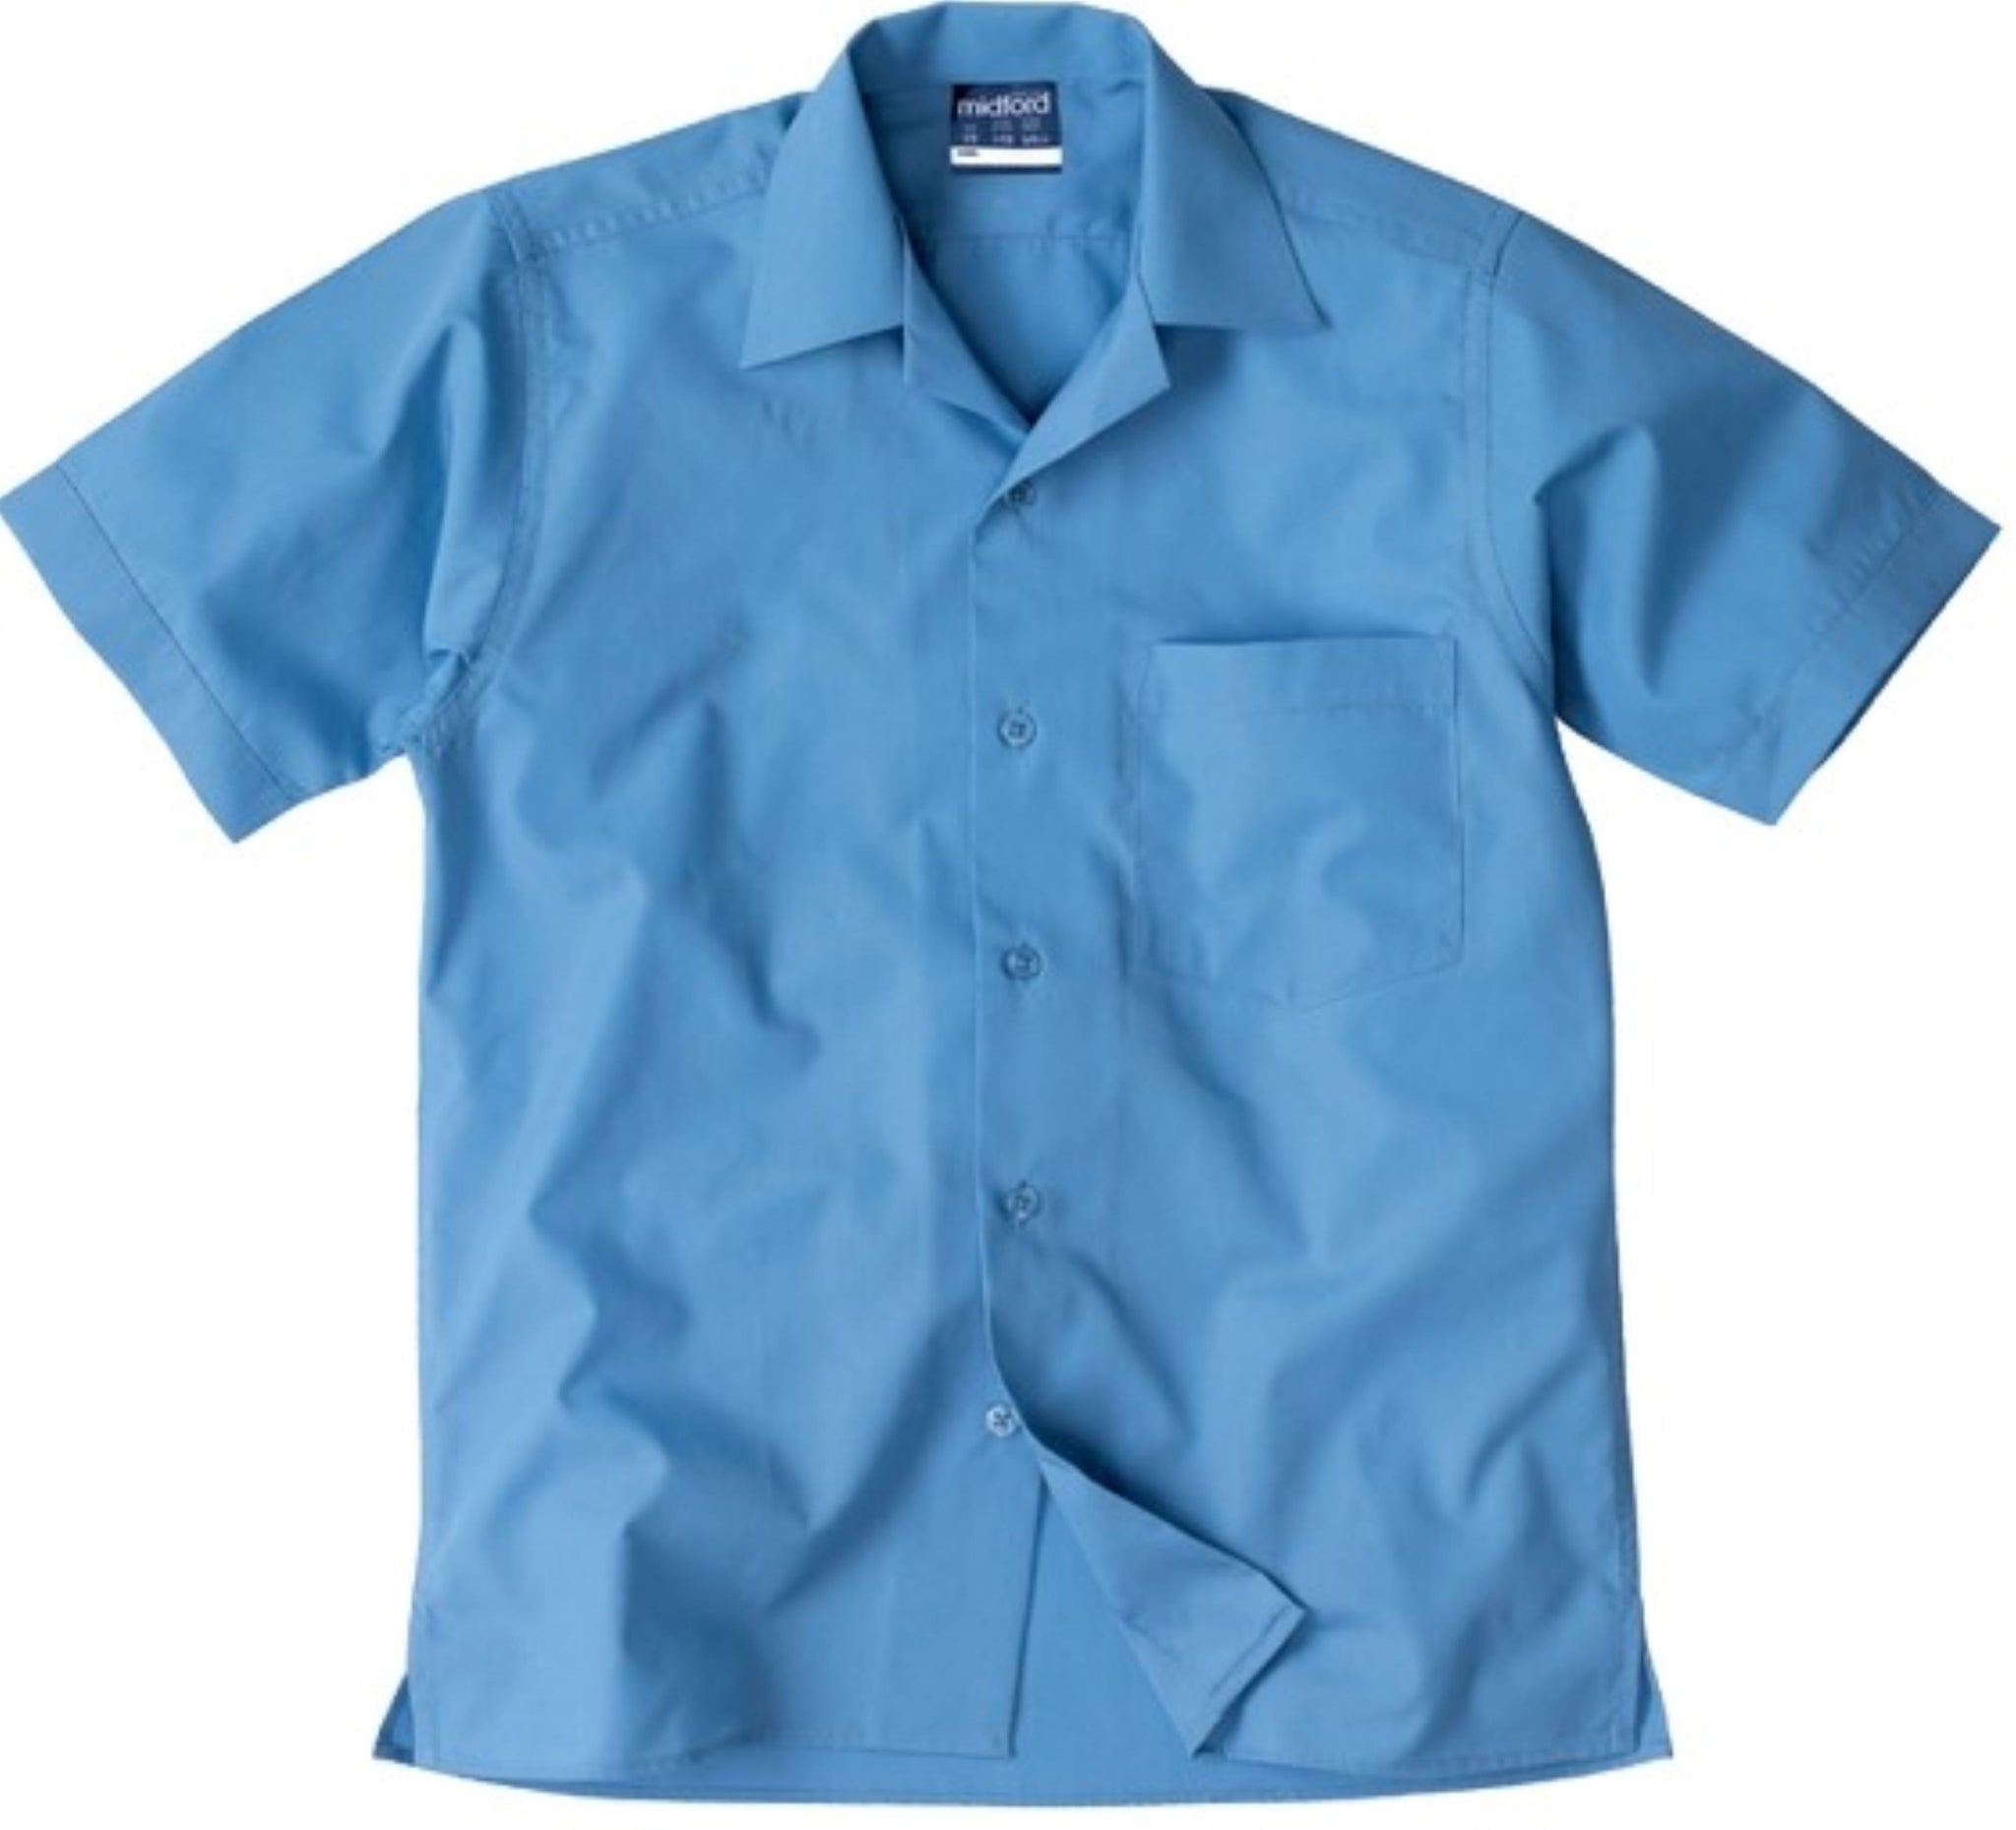 Boy's Short Sleeve Open Neck School Shirt